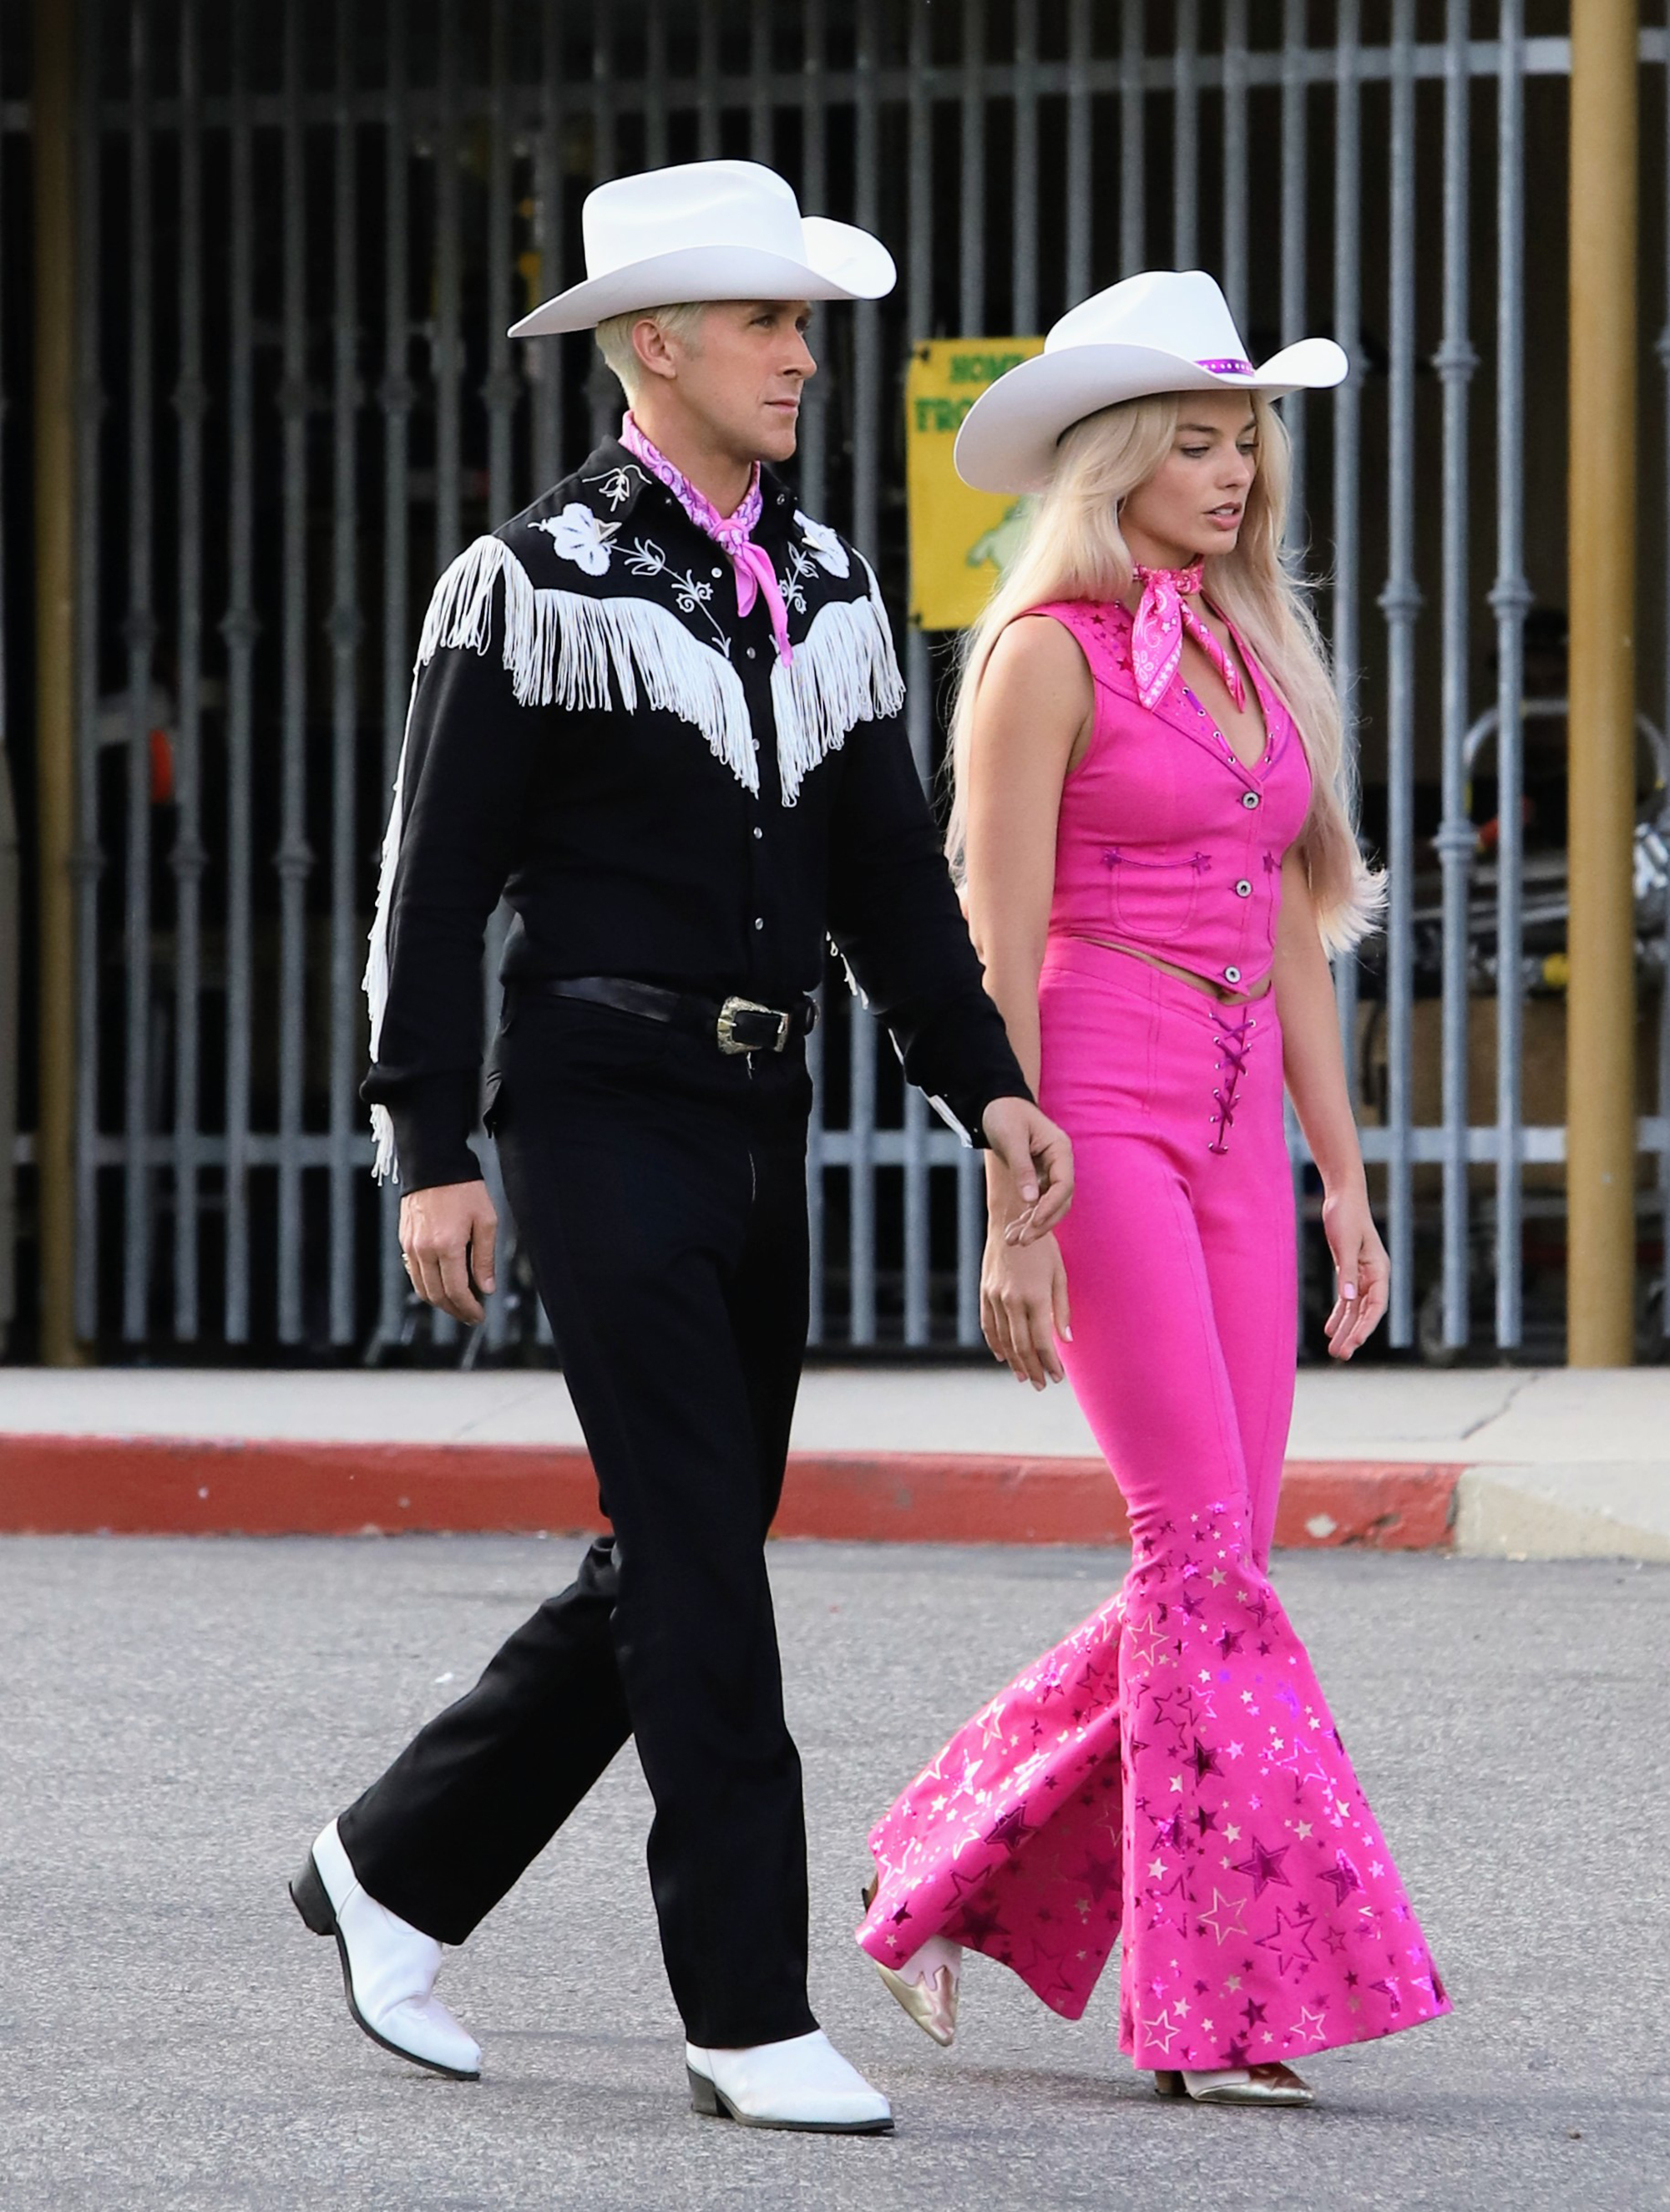 Ryan Gosling and Margot Robbie match on set of 'Barbie' movie